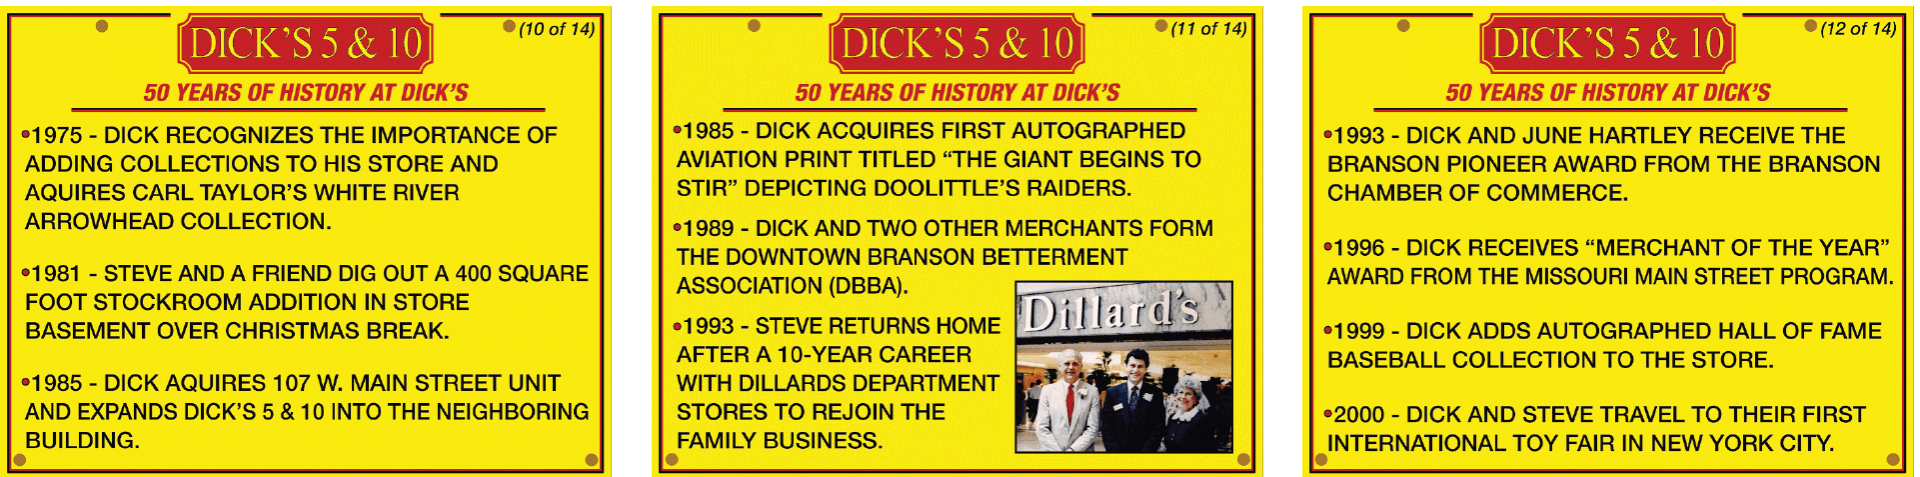 dicks 5 & 10 history 4